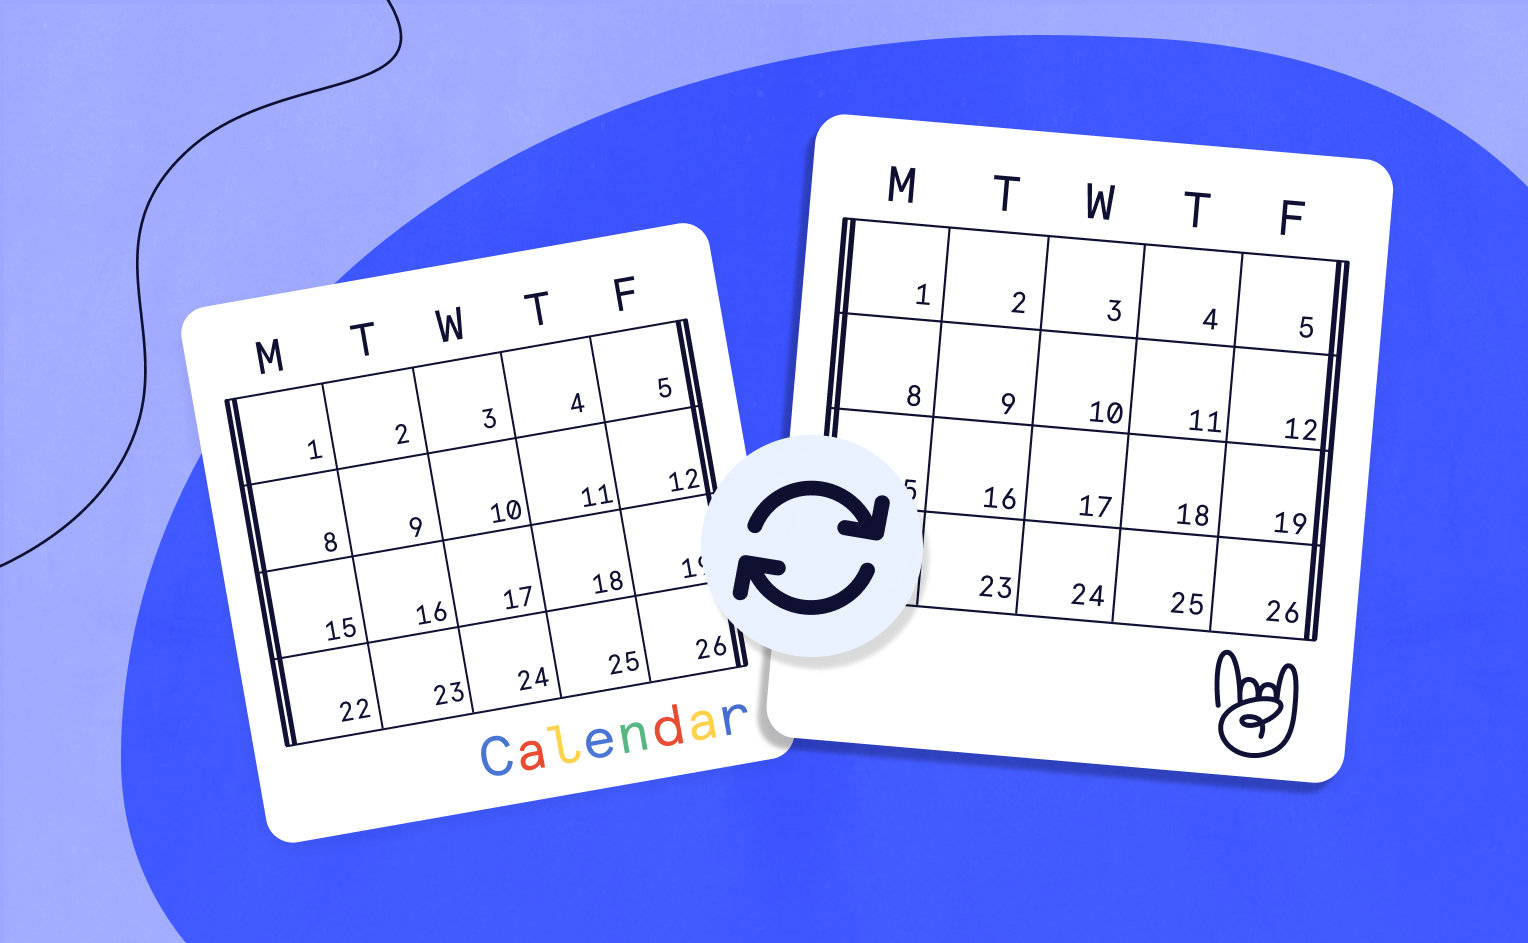 How to Add a Google Calendar to WordPress